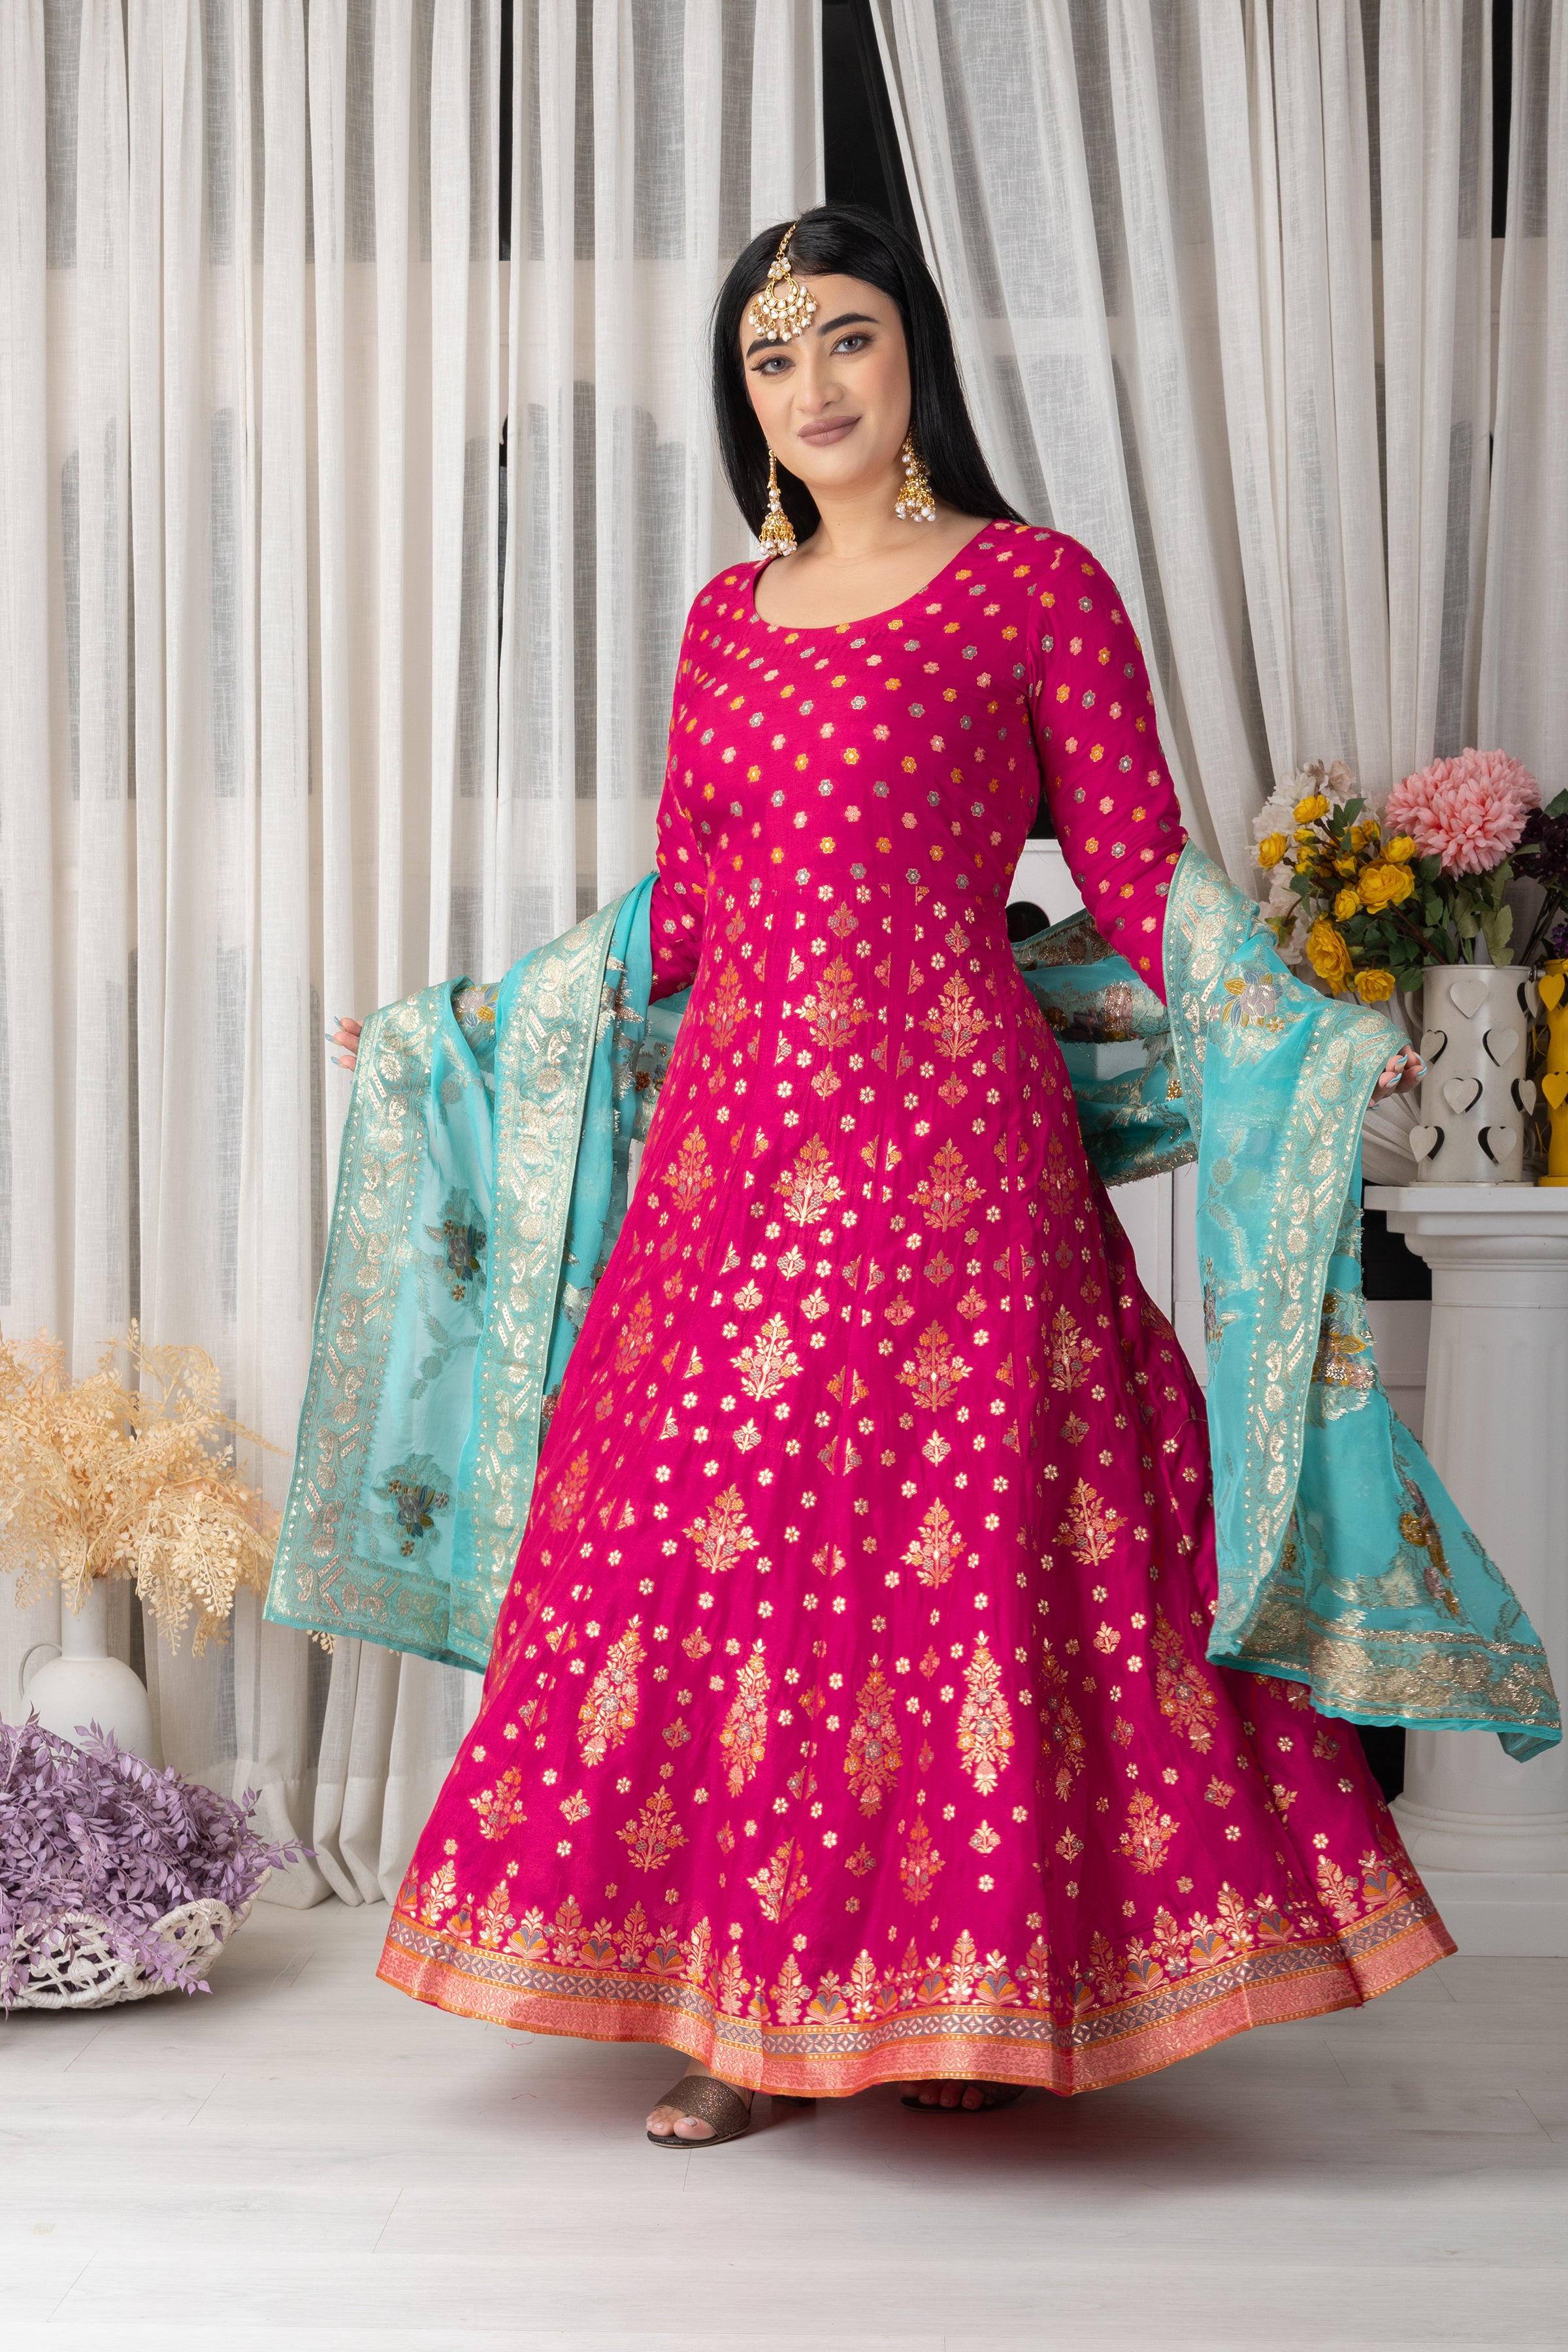 YOYO Fashion Georgette Latest Blue Silk Anarkali Dress at Rs 1599 in Surat